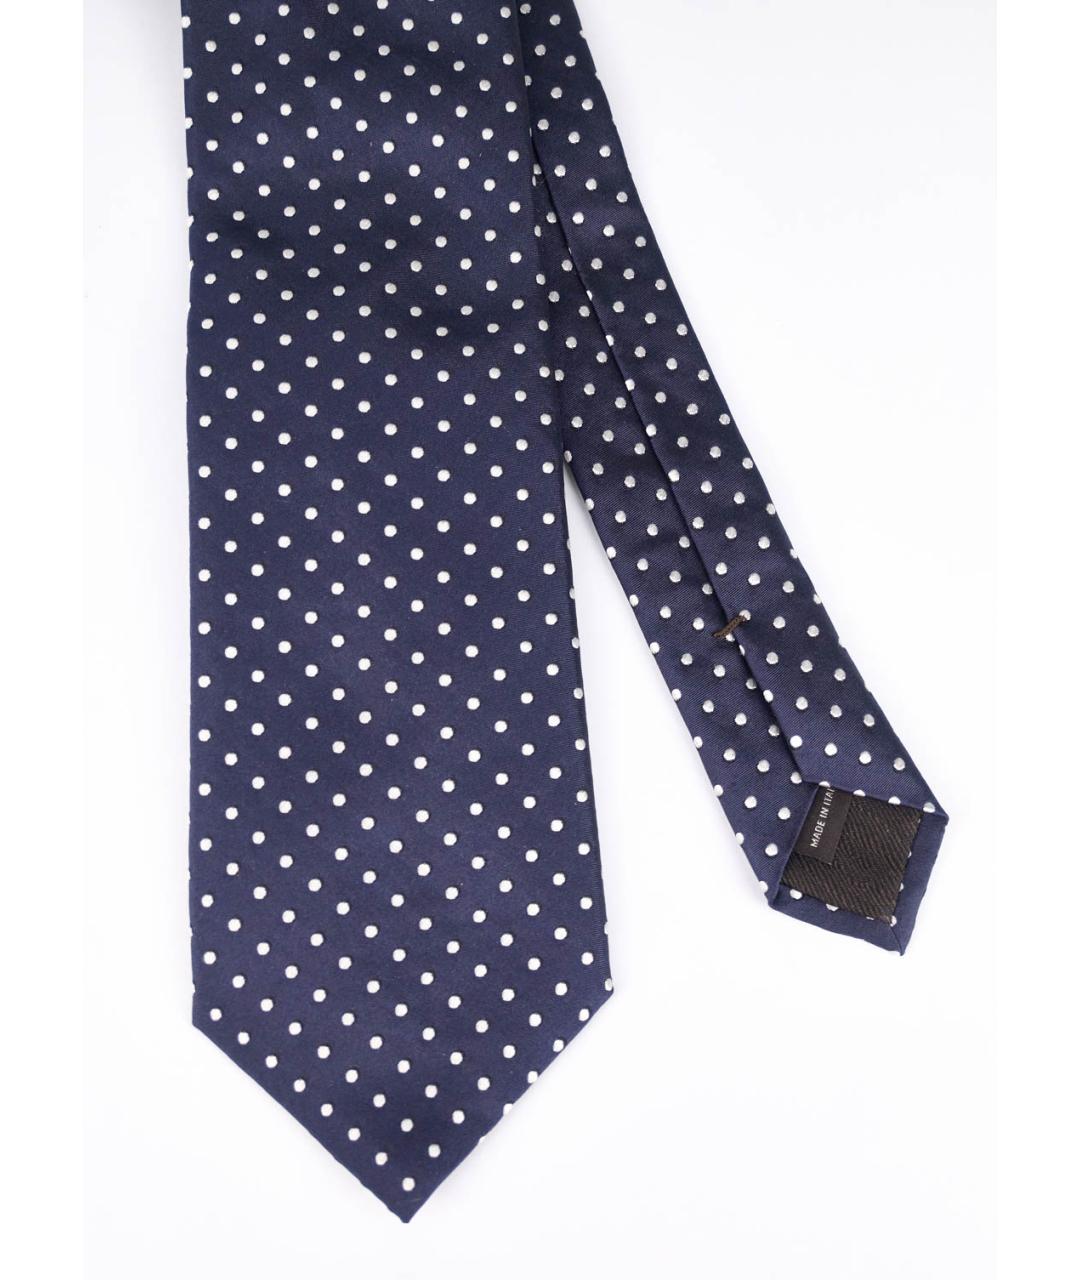 CANALI Синий шелковый галстук, фото 2